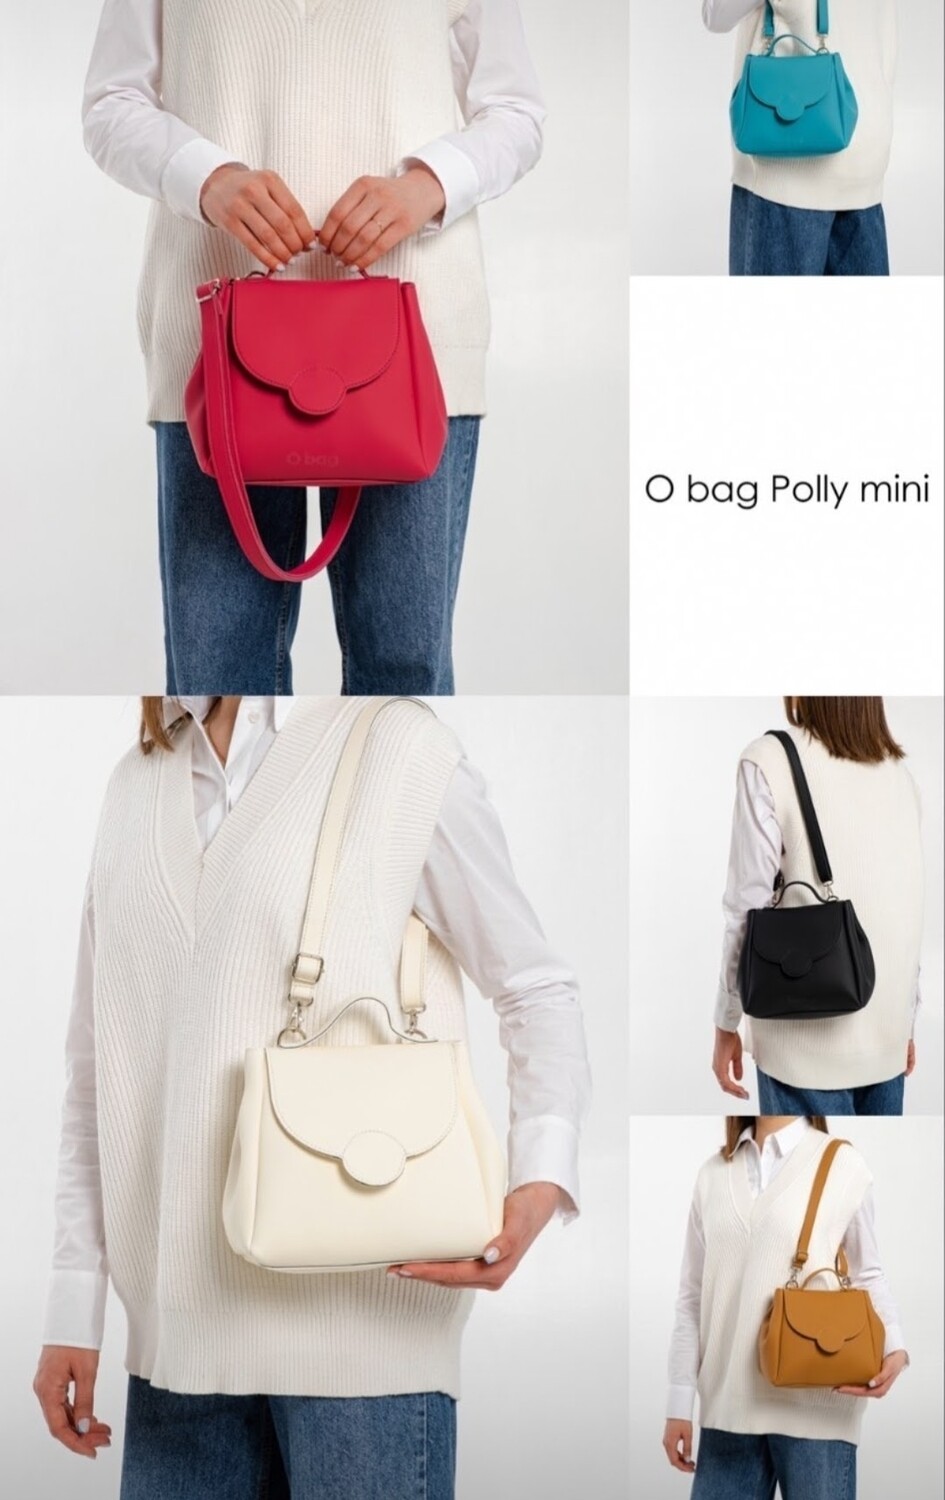 O bag polly mini